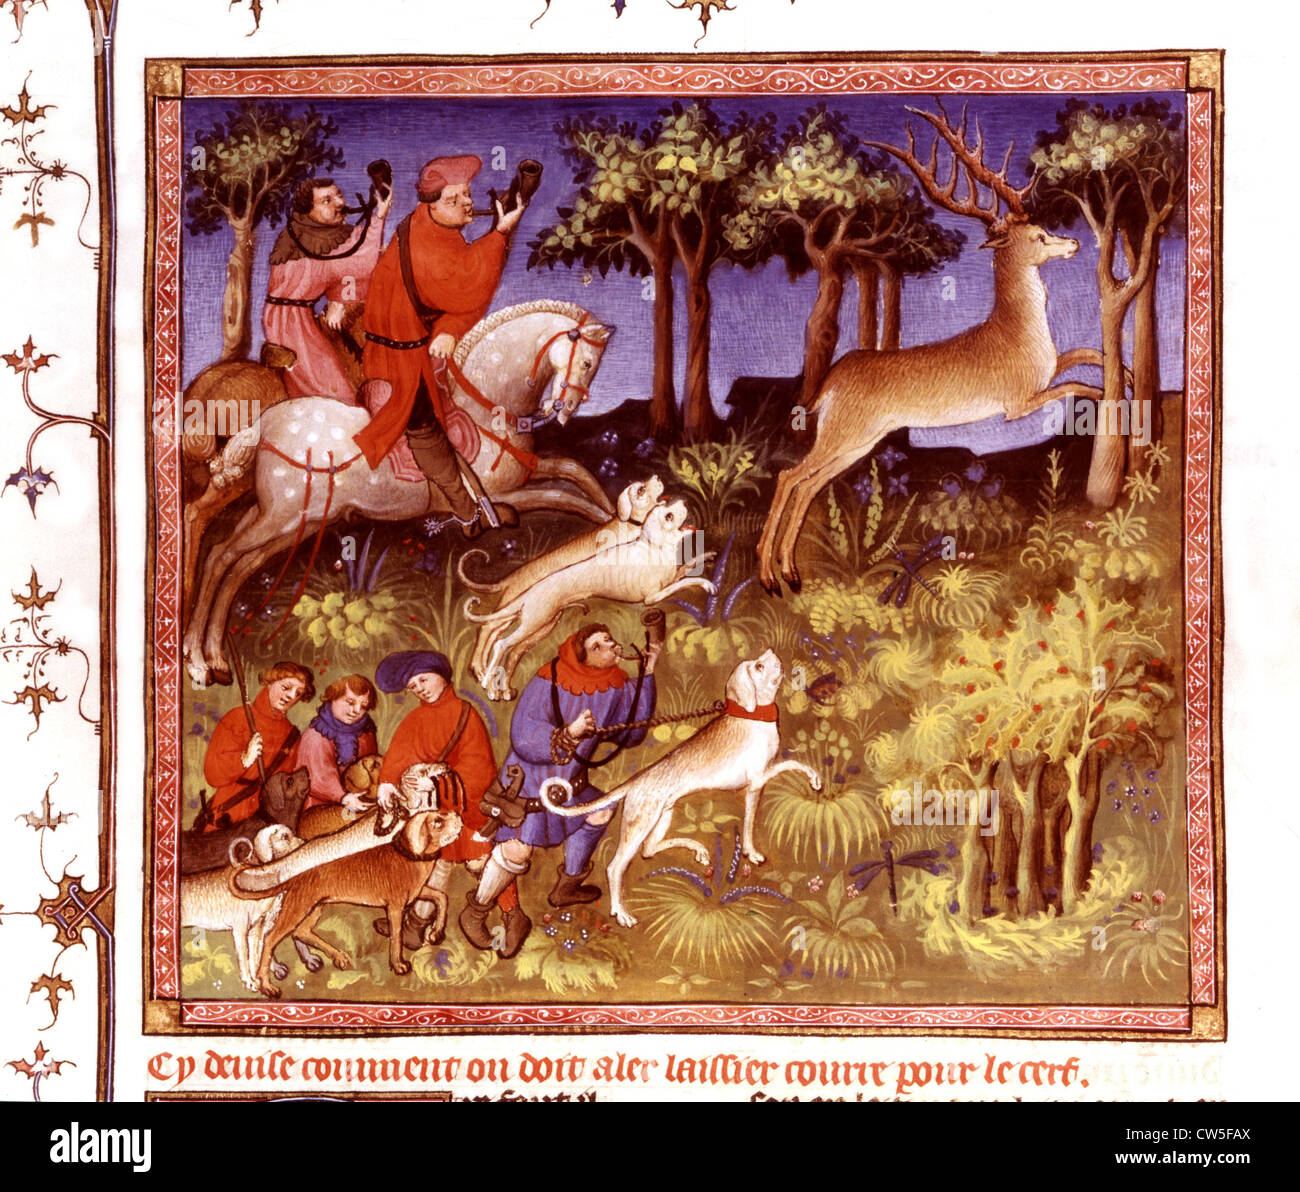 Gaston Phoebus, Livre de chasse (Book of Hunting), Facsimile Edition